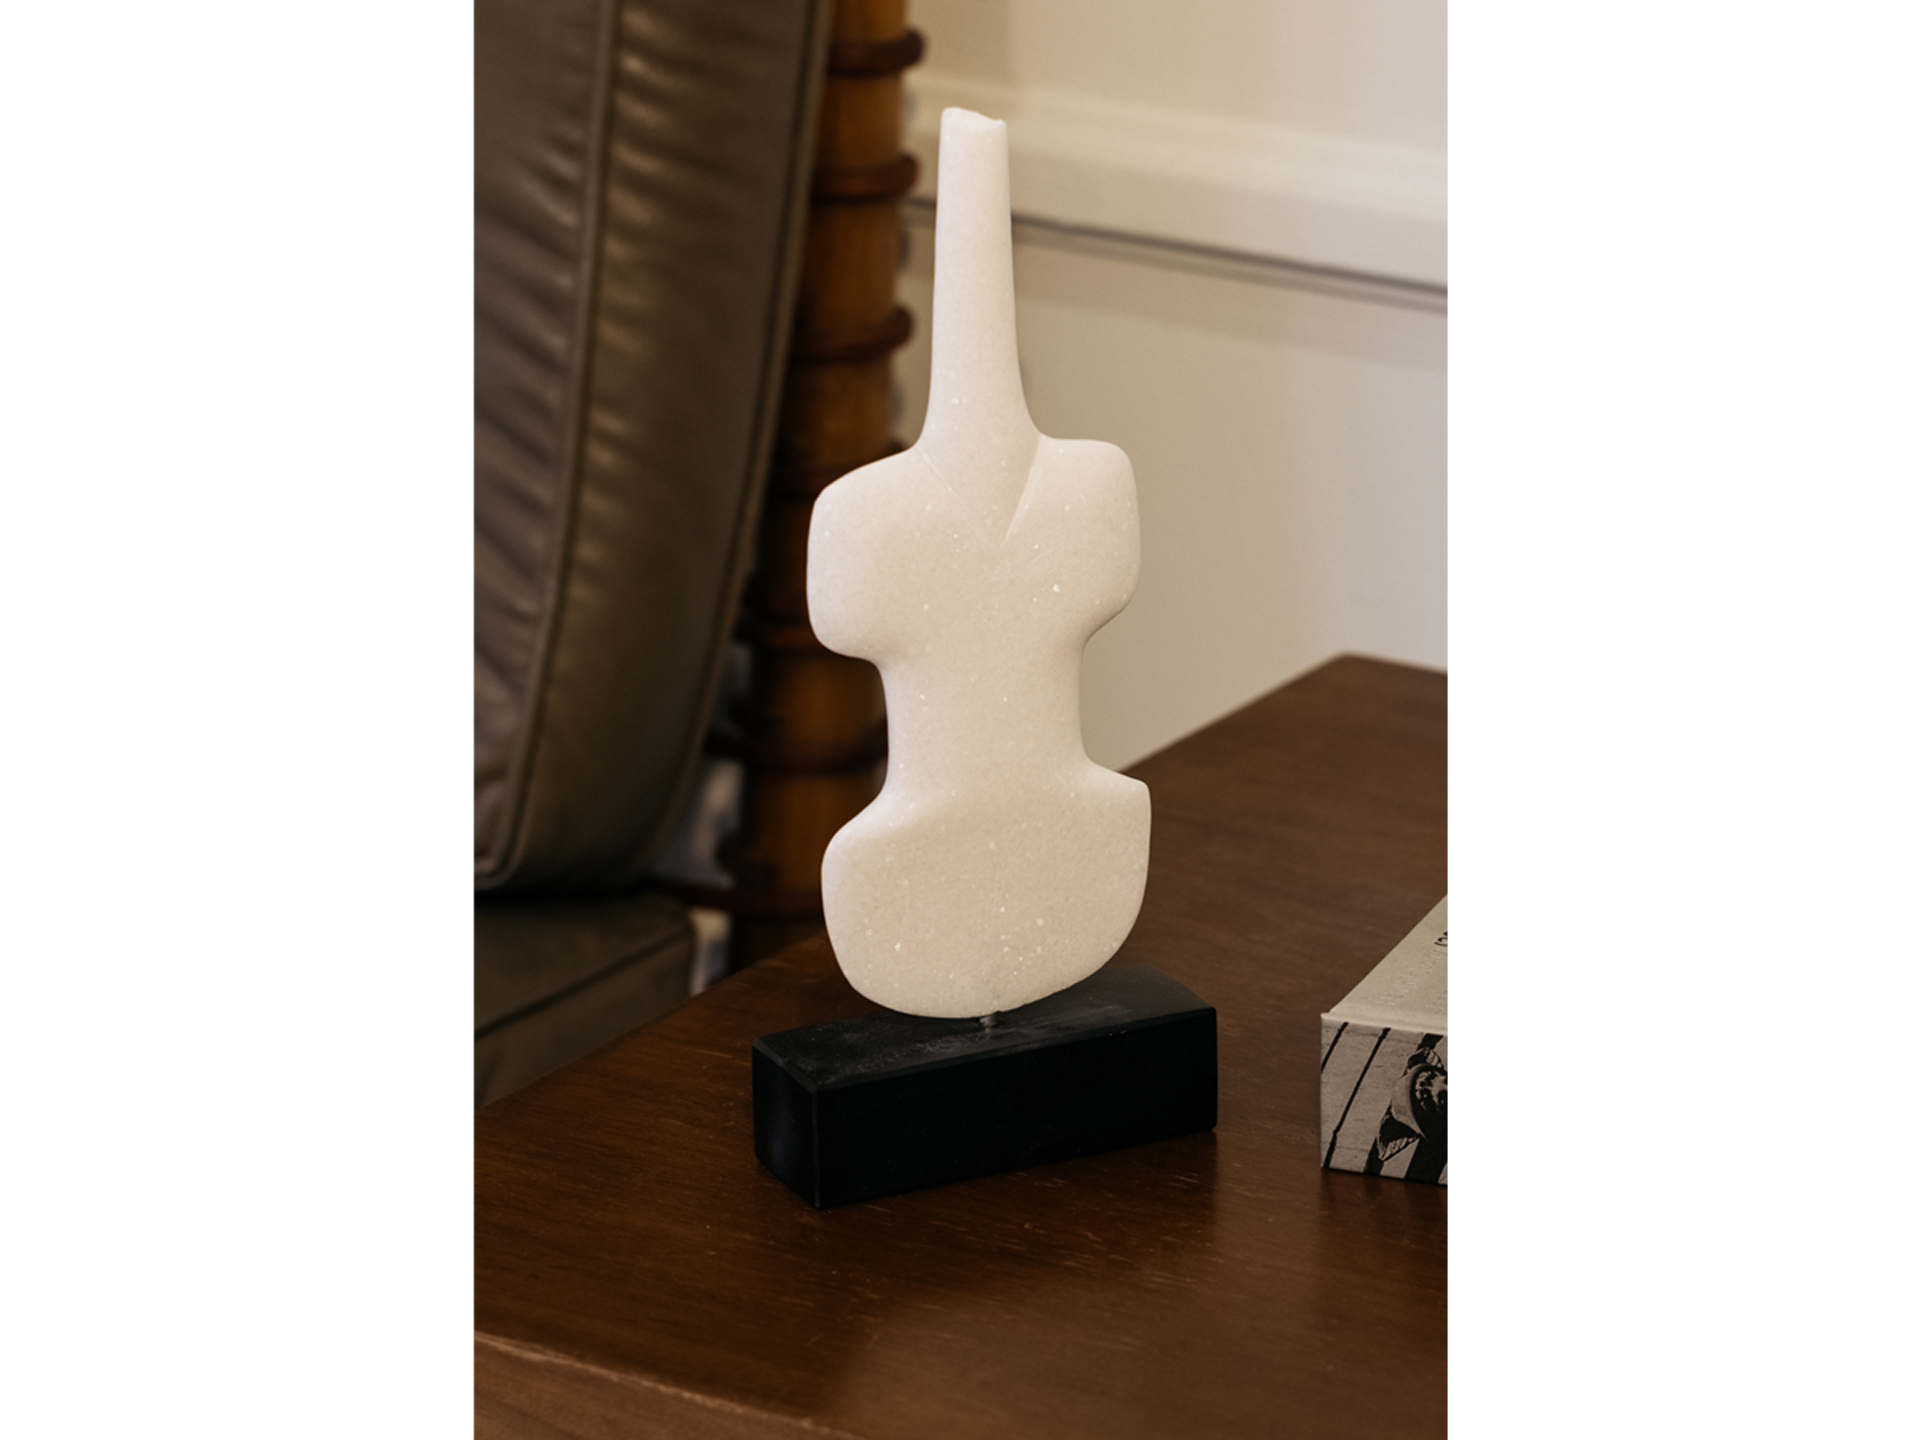 Violin-Shaped Figurine Replica